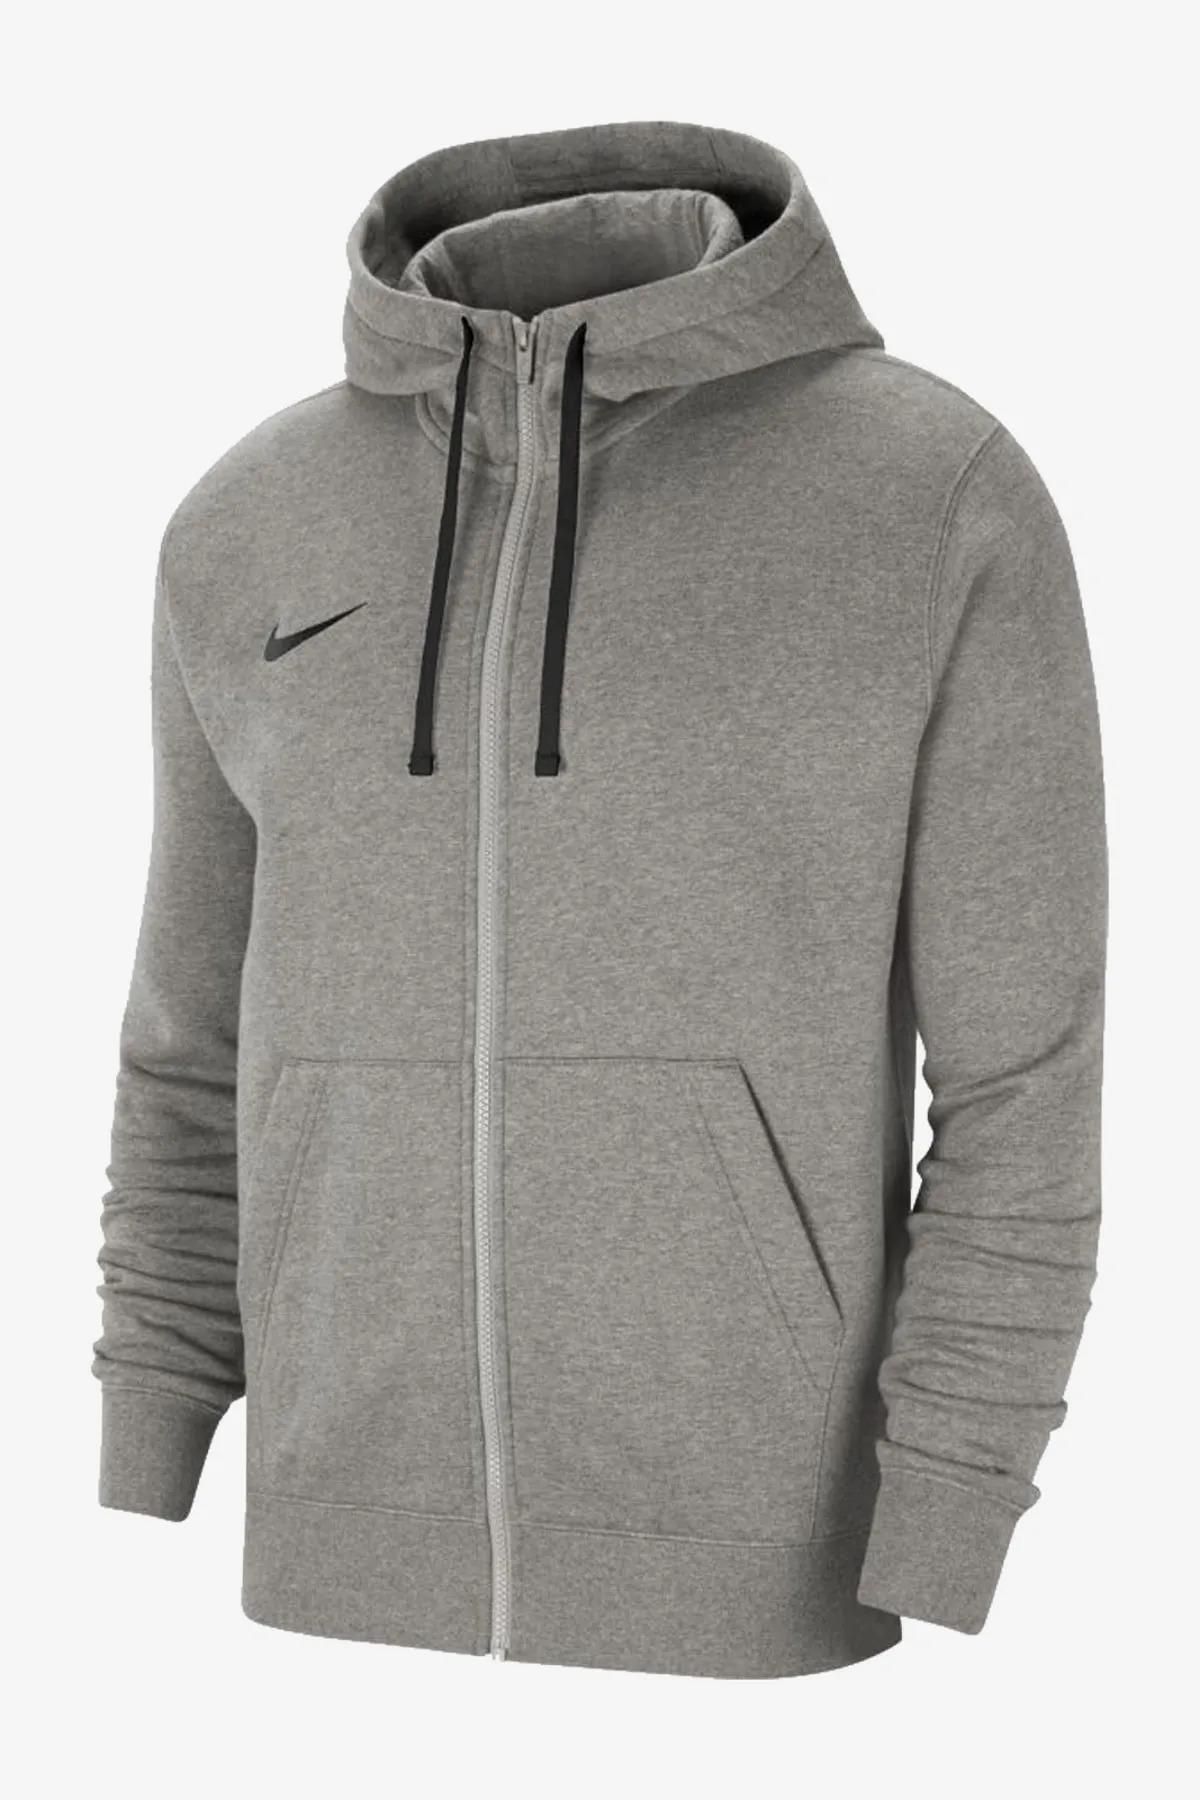 Nike Dry Park Cw6887-063 Erkek Sweatshirt